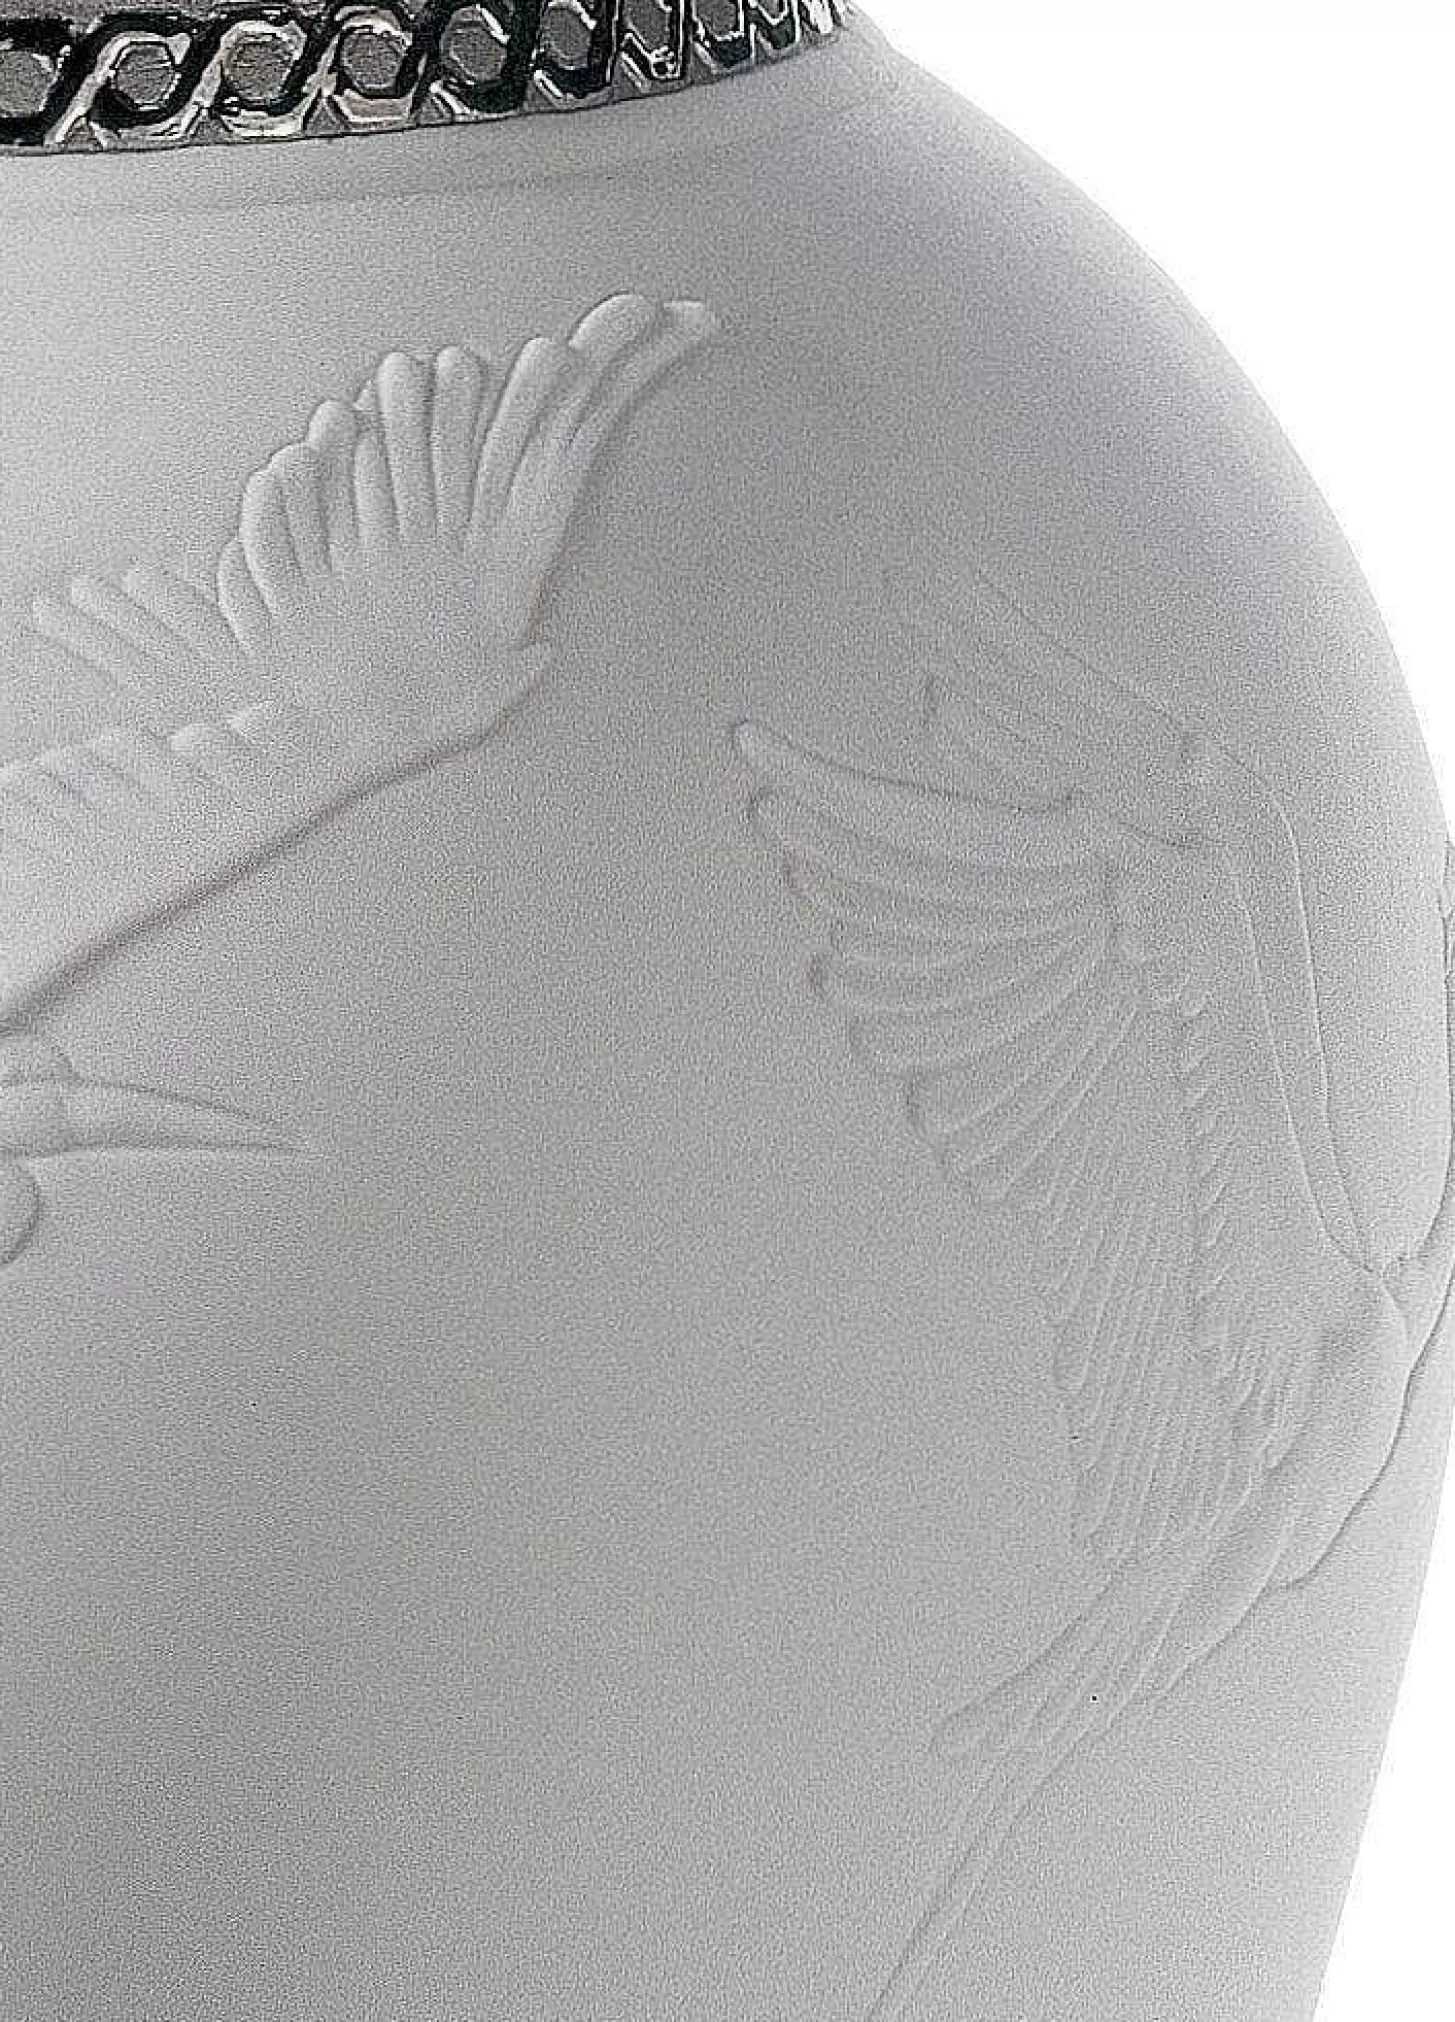 Lladró Herons Realm Covered Vase Figurine. Silver Lustre^ Gifts